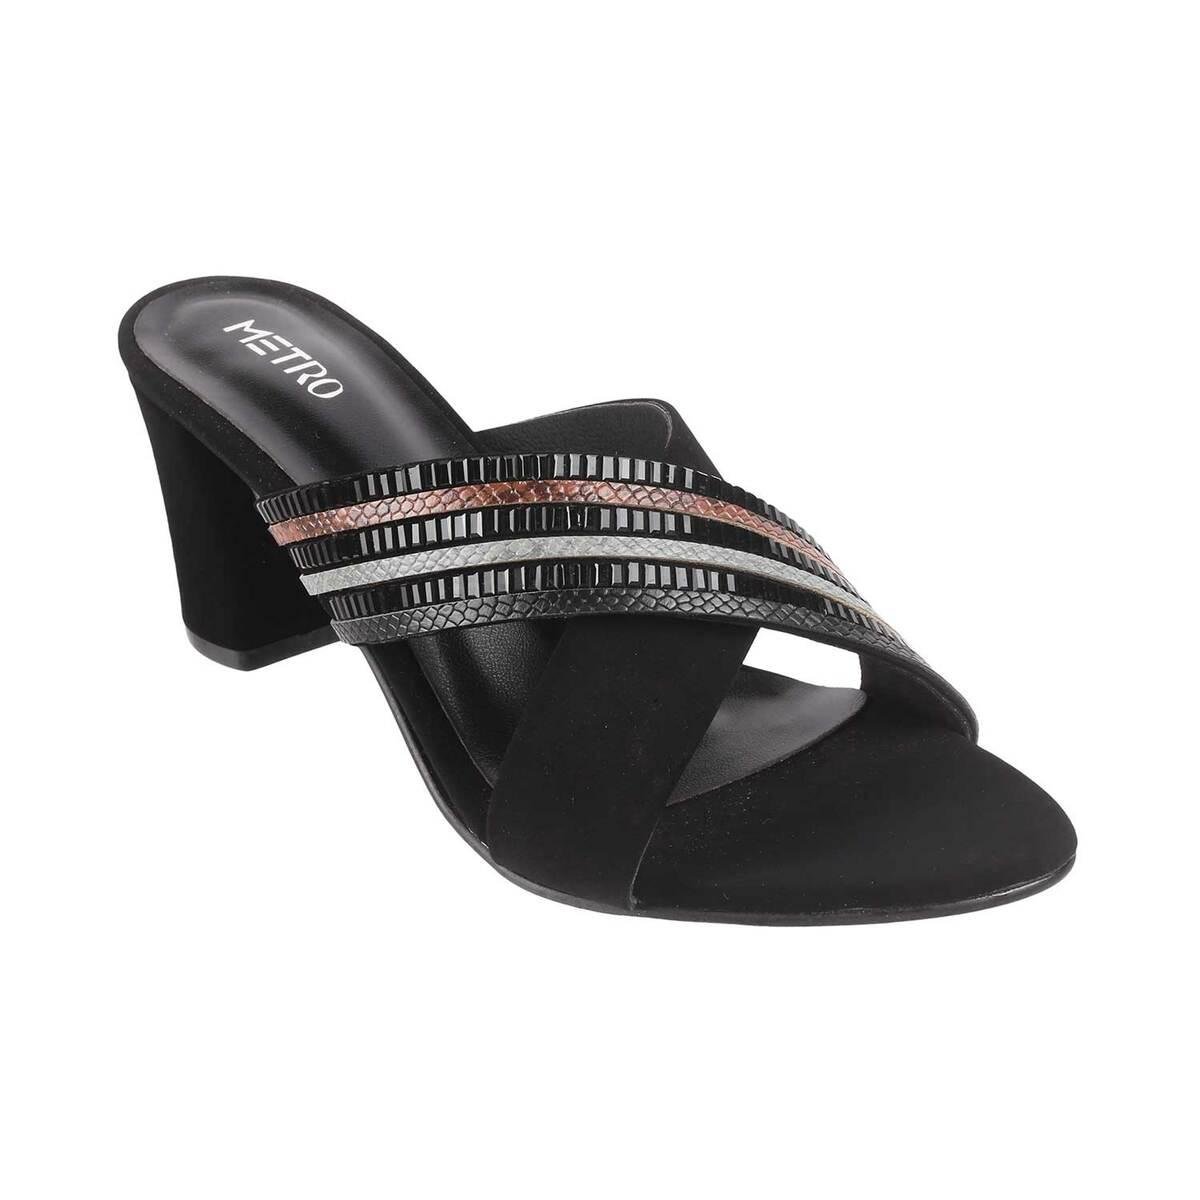 Aishan Black Platform High Heel Slide Sandals